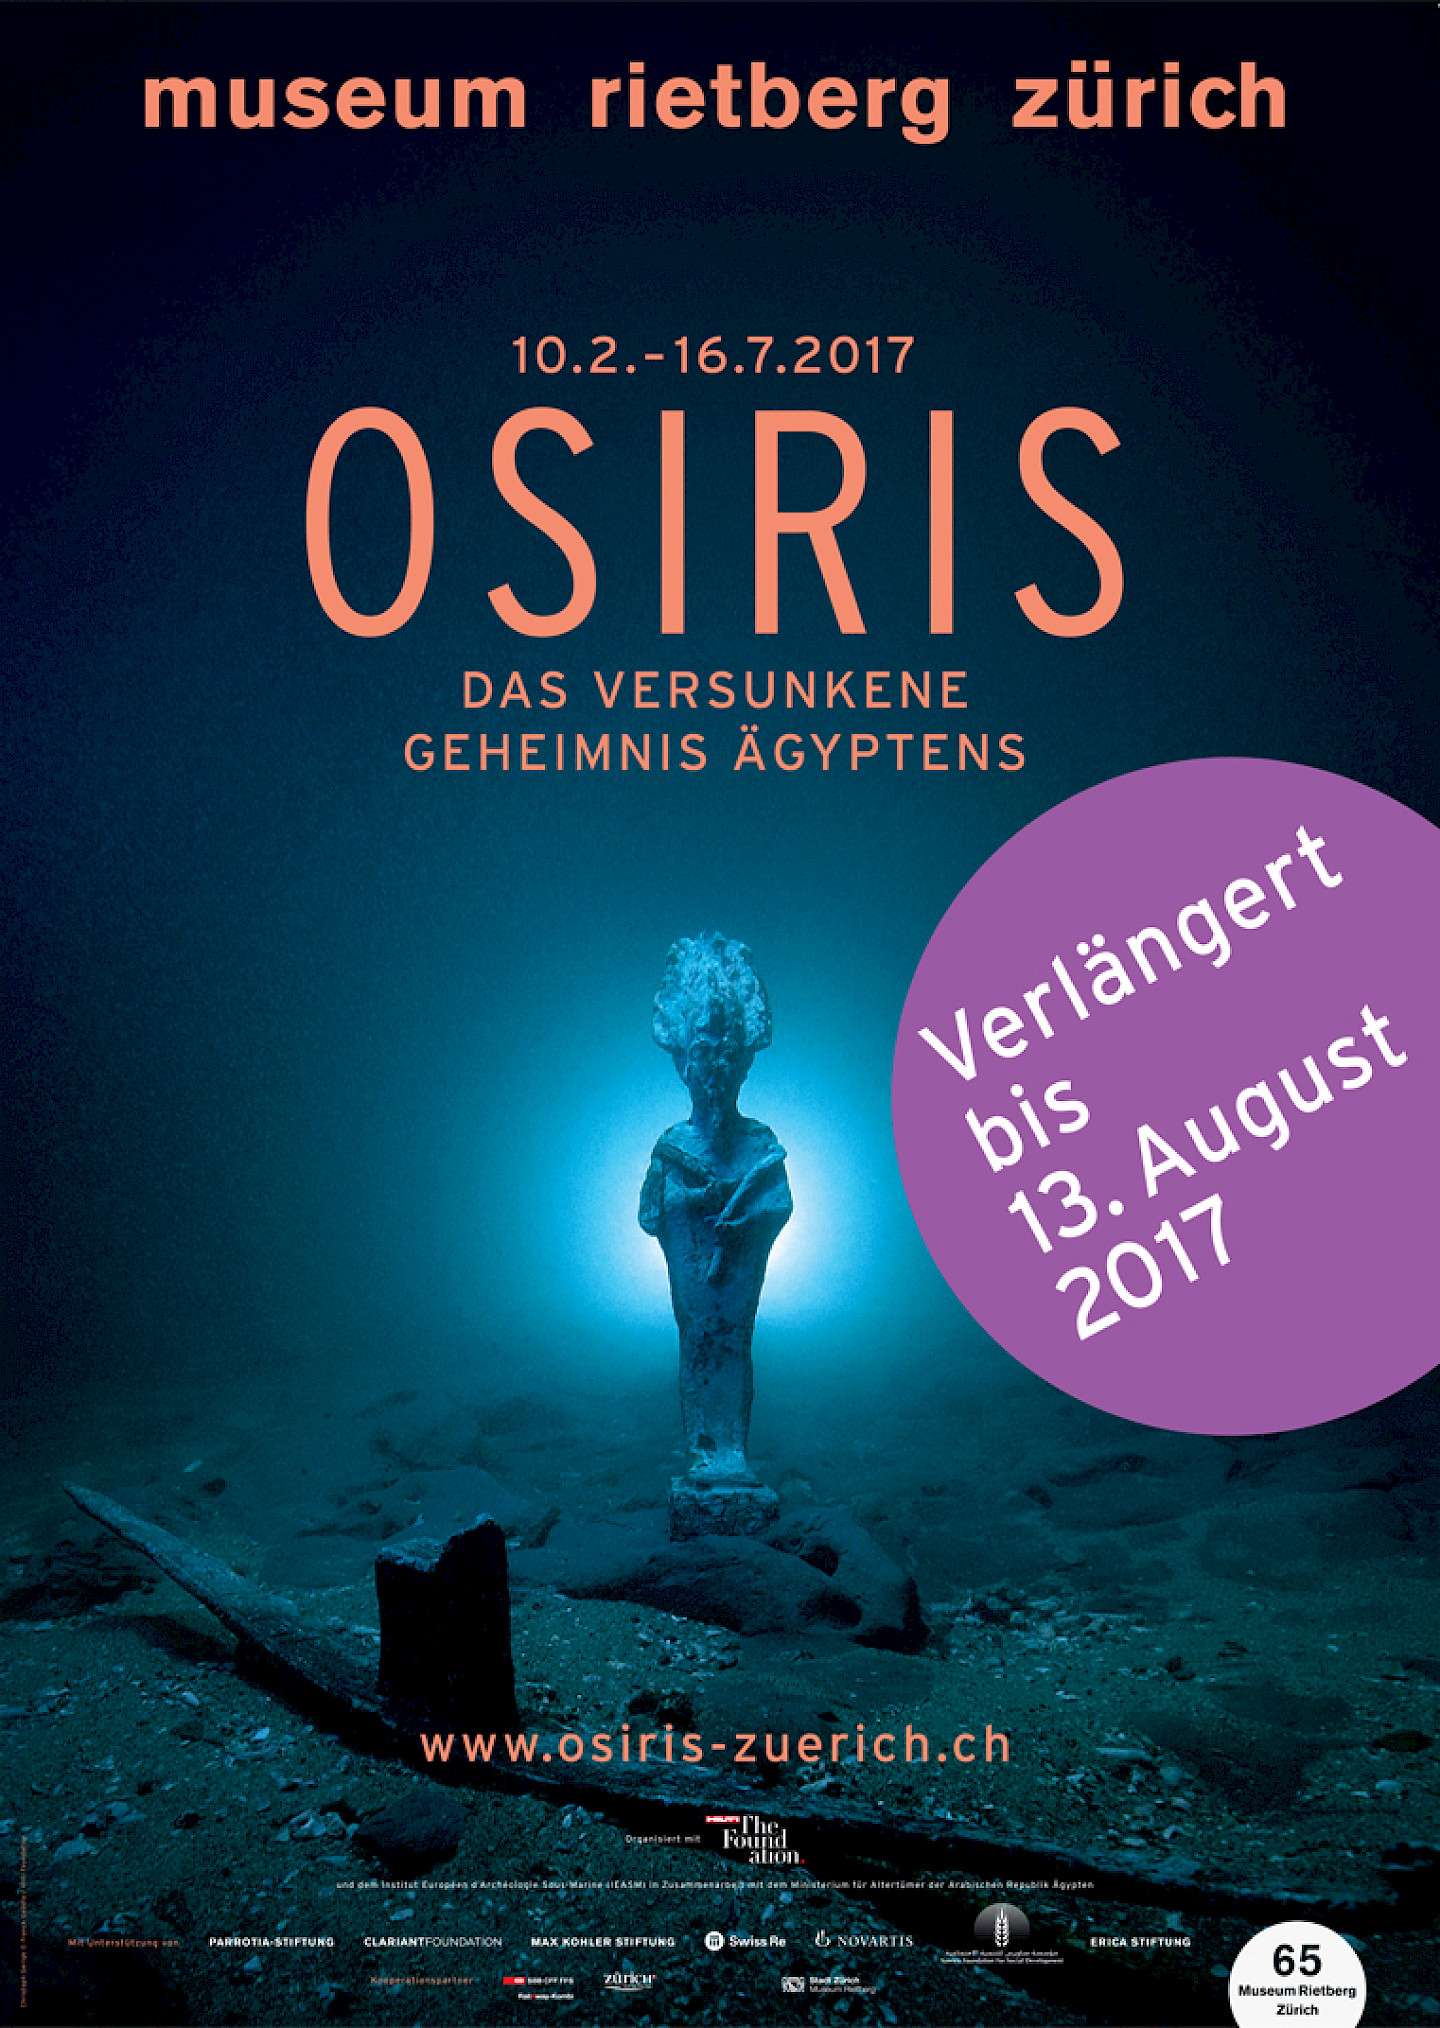 OSIRIS – Das versunkene Geheimnis Ägyptens